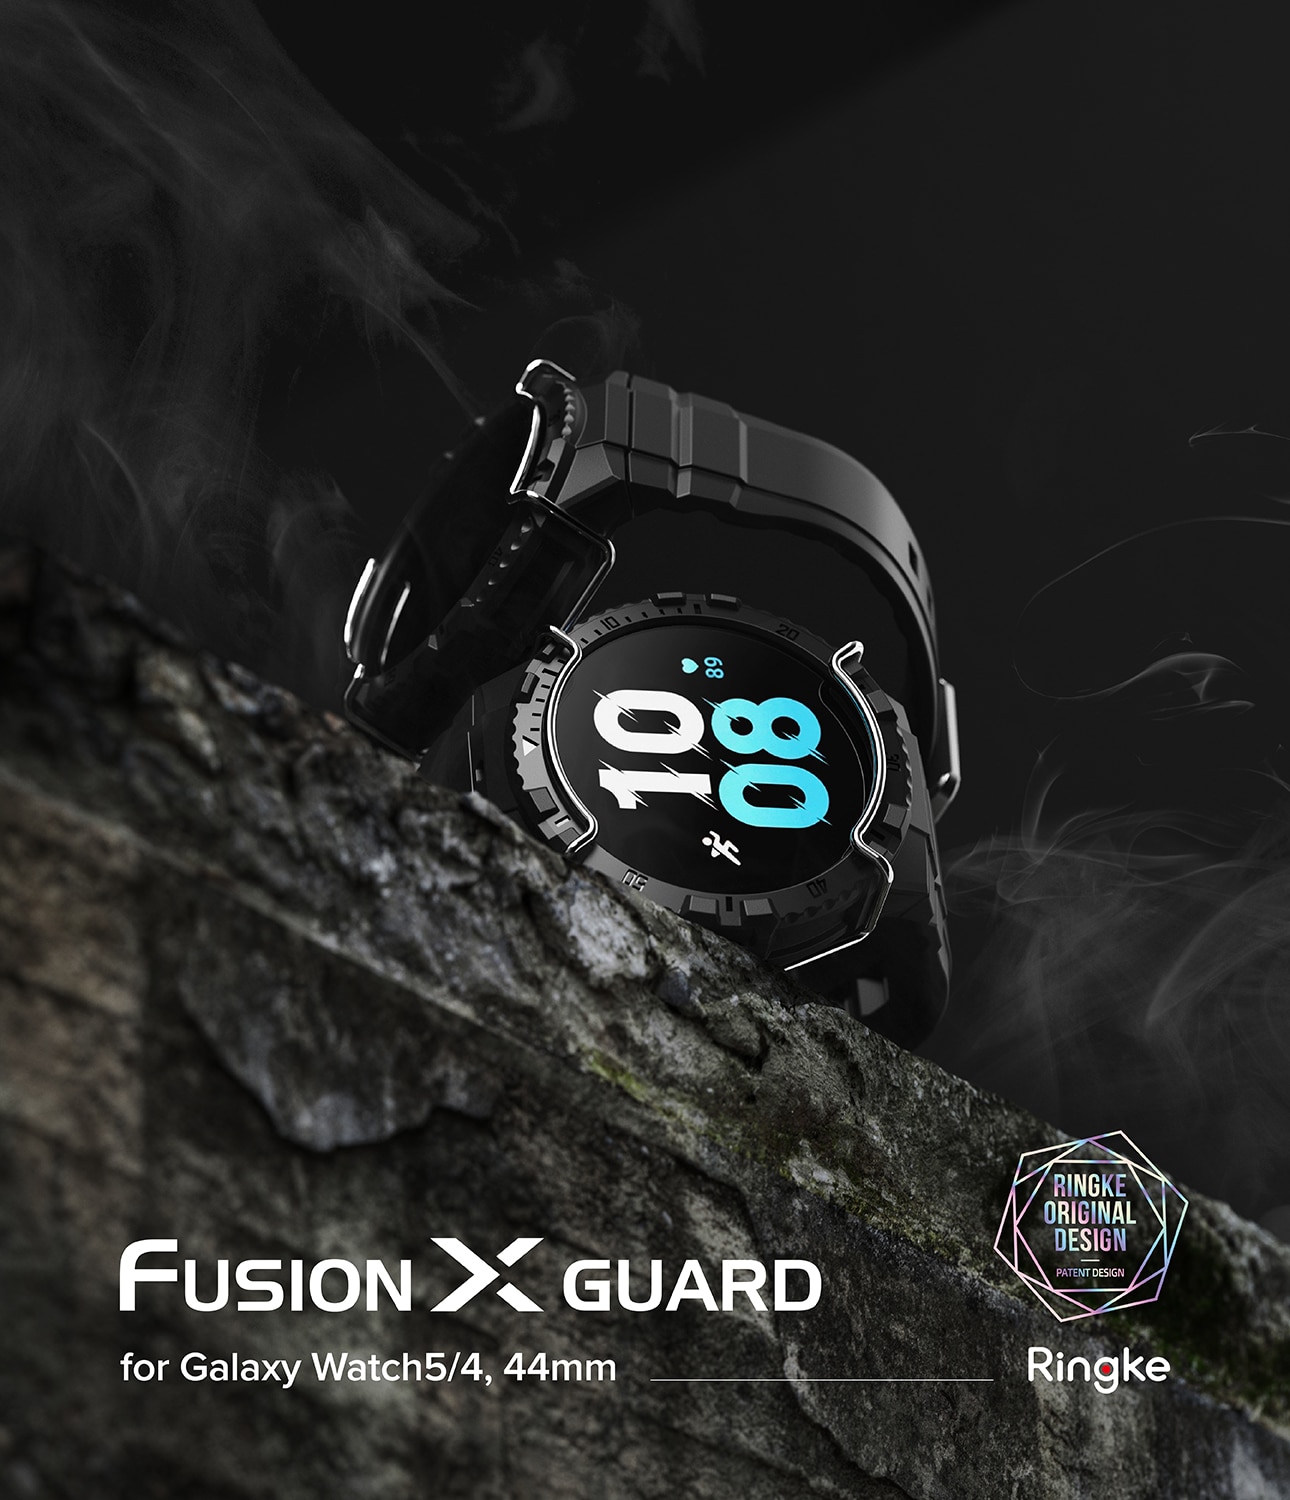 Fusion-X Guard Case+Band Samsung Galaxy Watch 5 44mm, Black